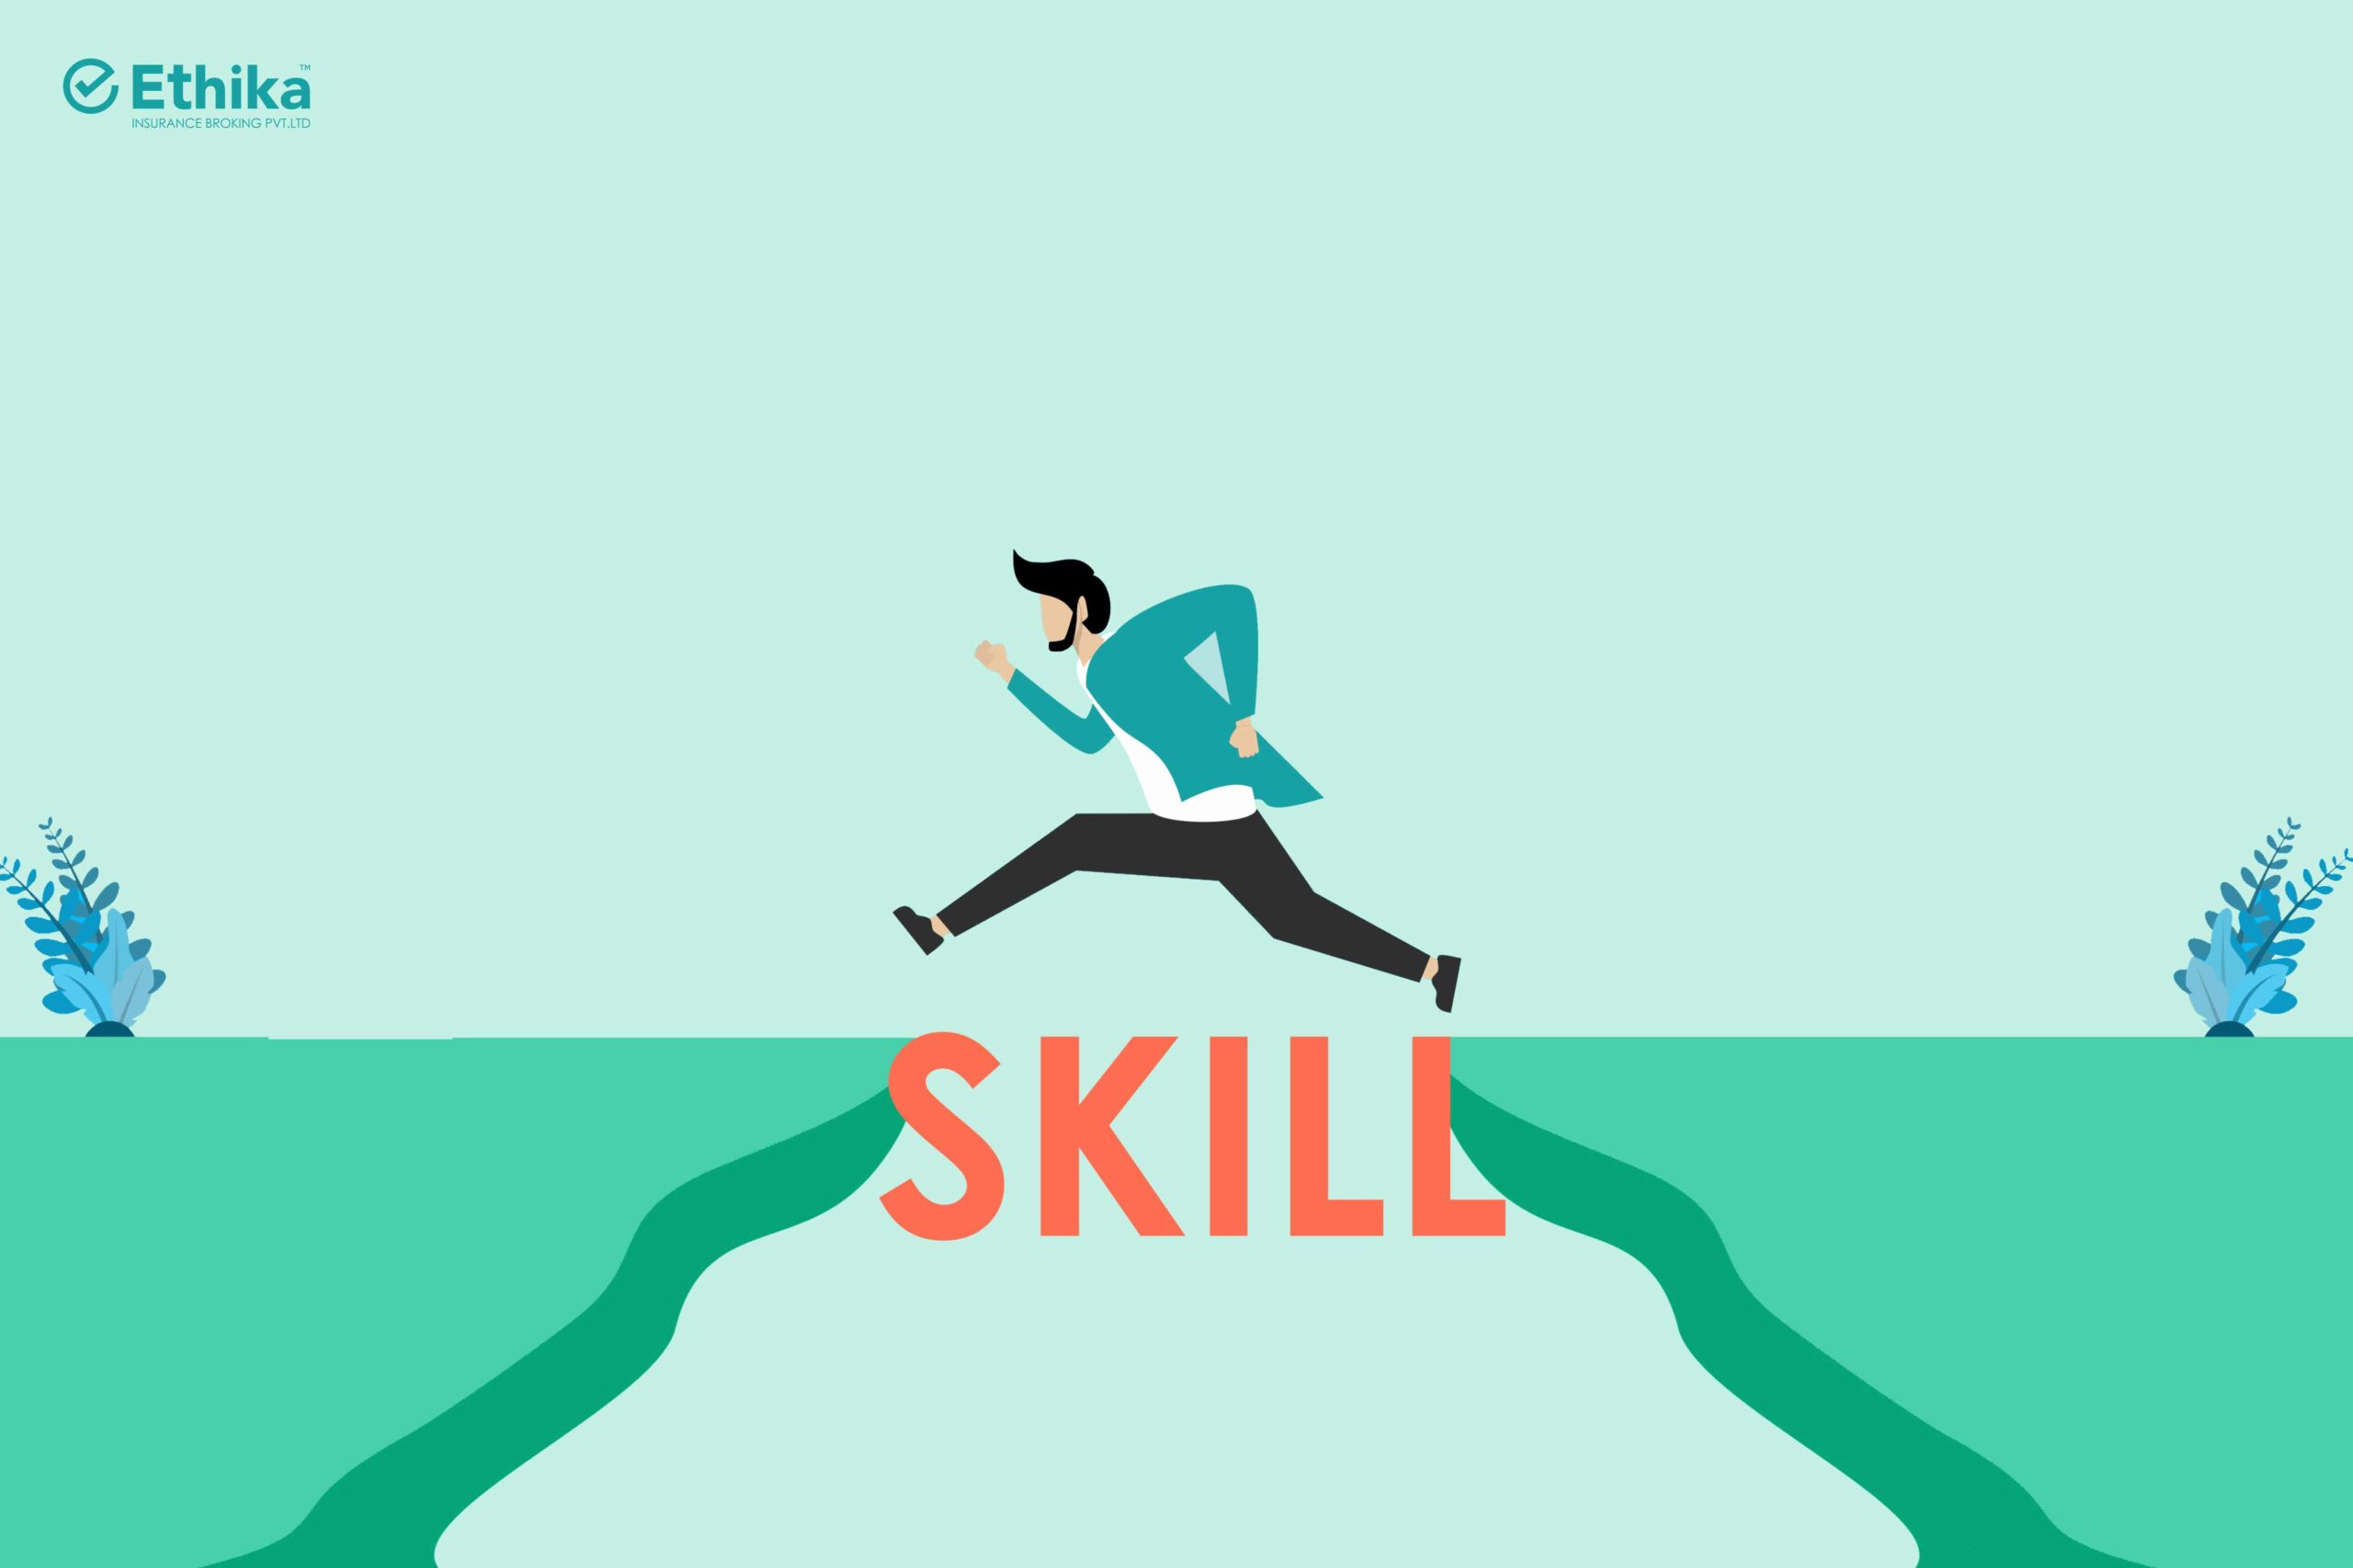 skill gaps in workforce - vector image of a guy jumping between gap